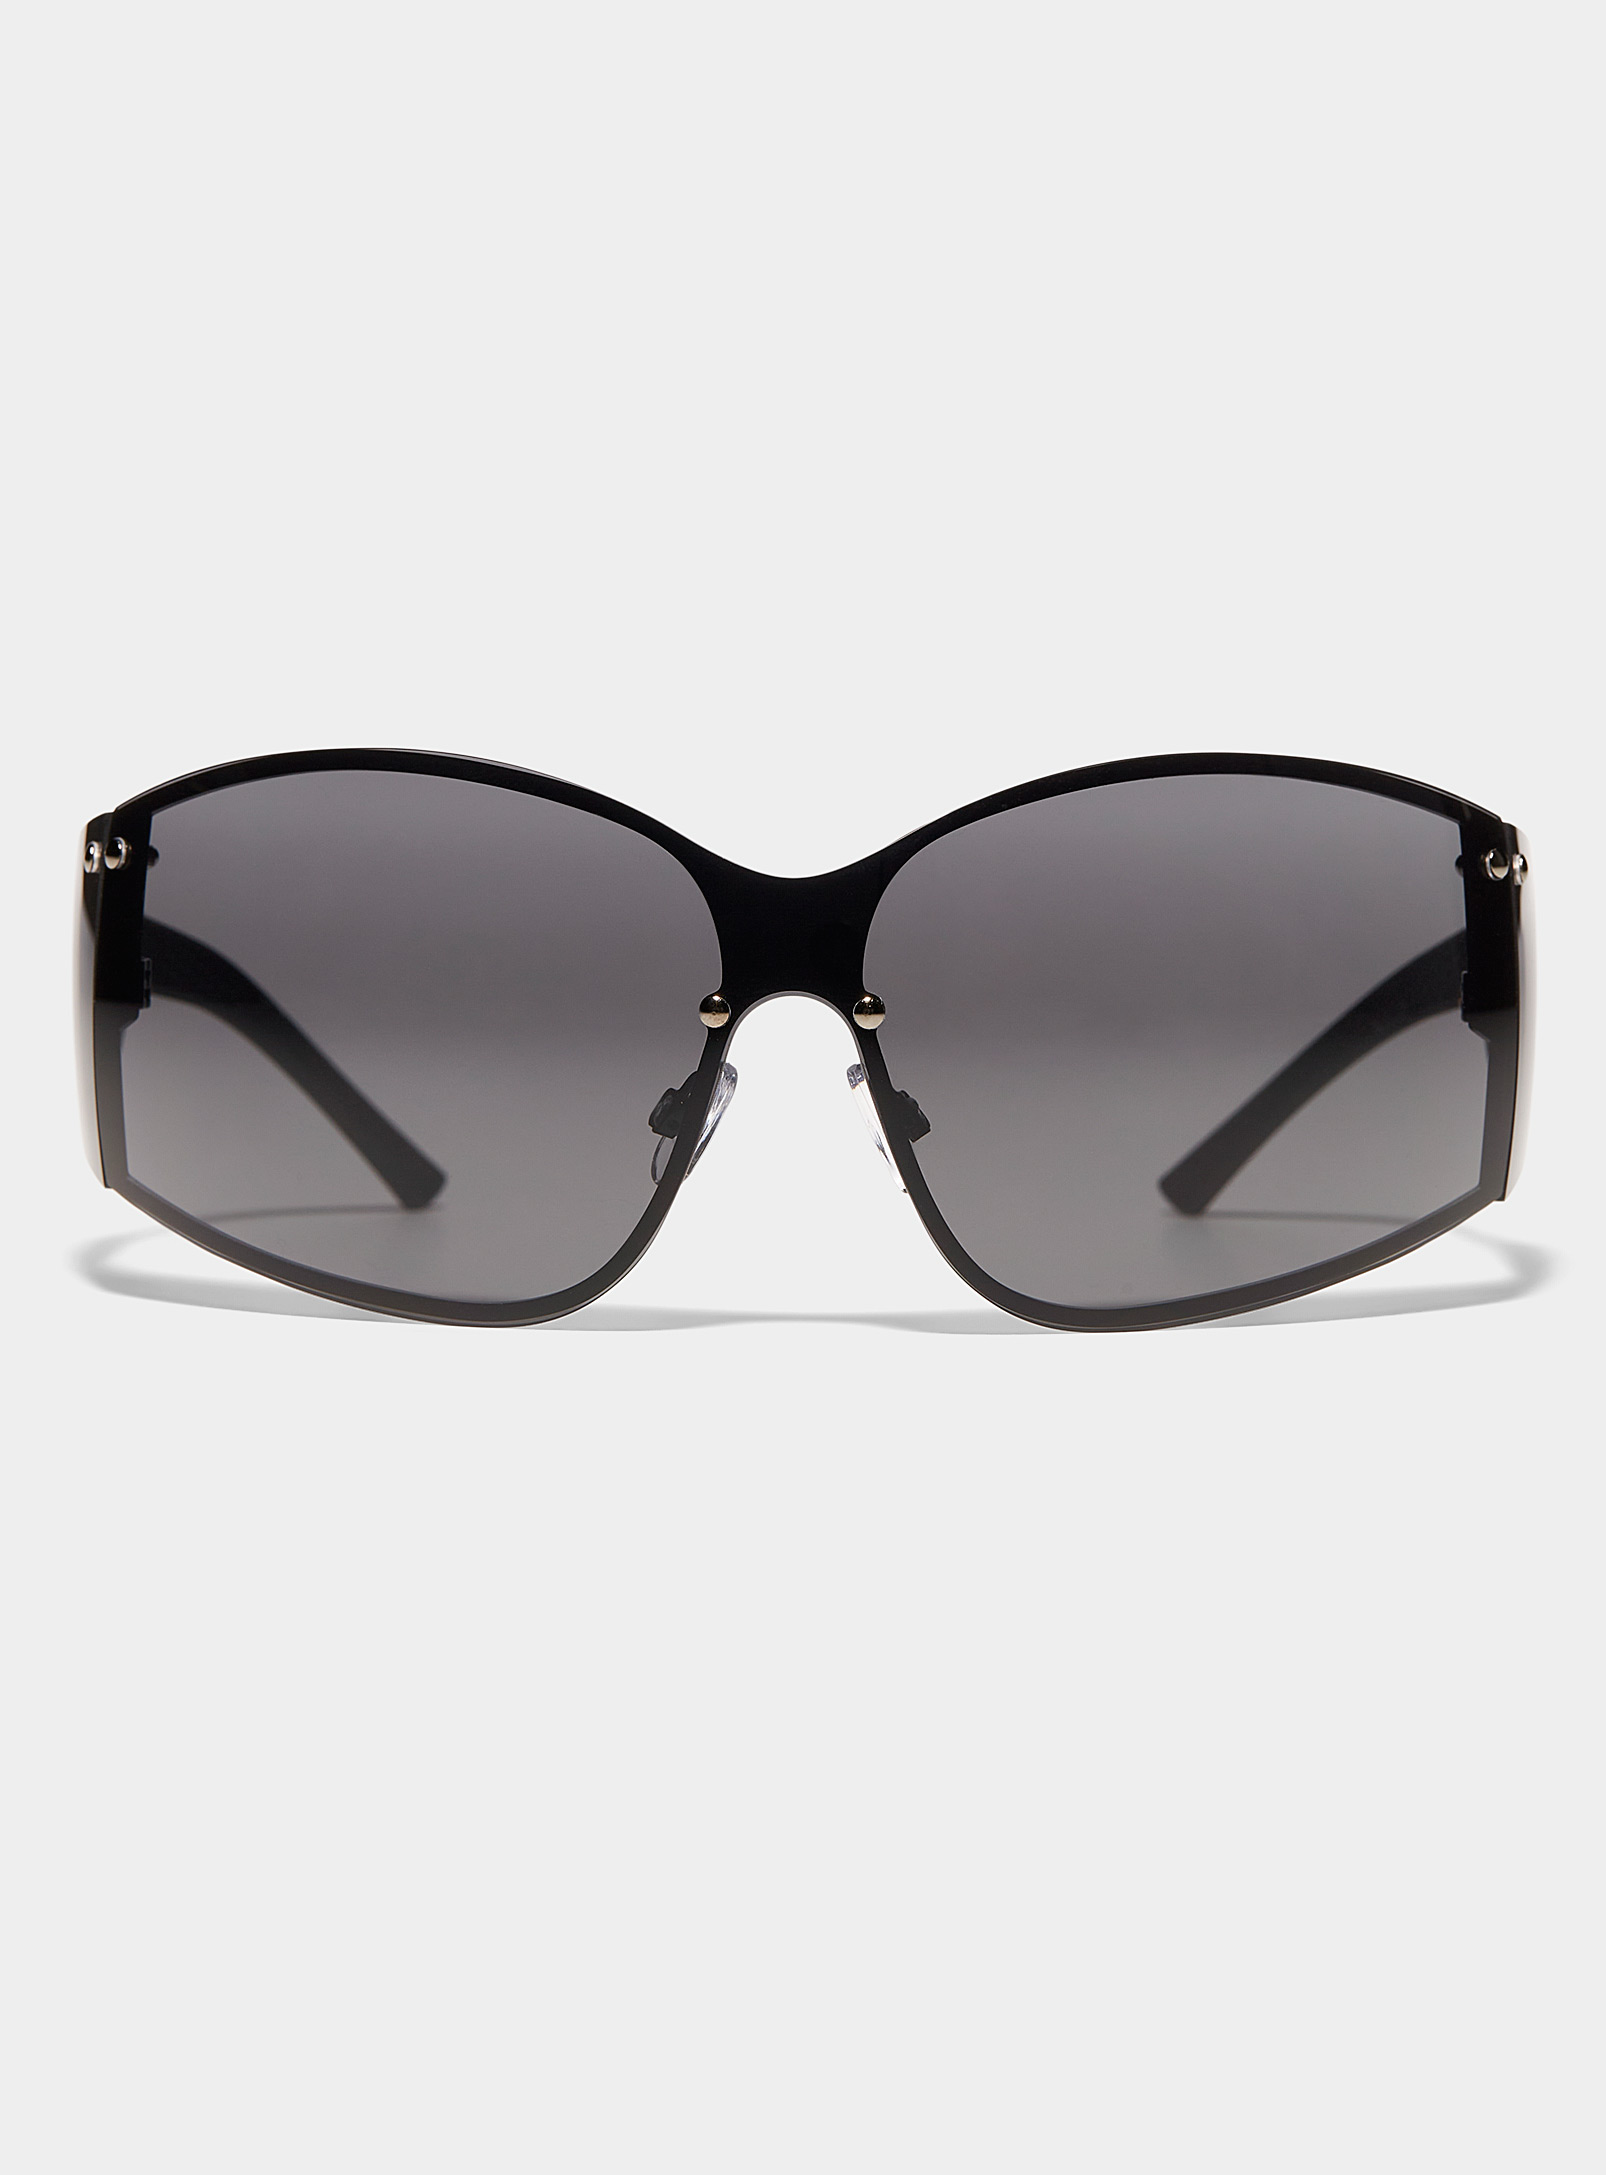 Spitfire - Women's Sleaford oversized shield sunglasses